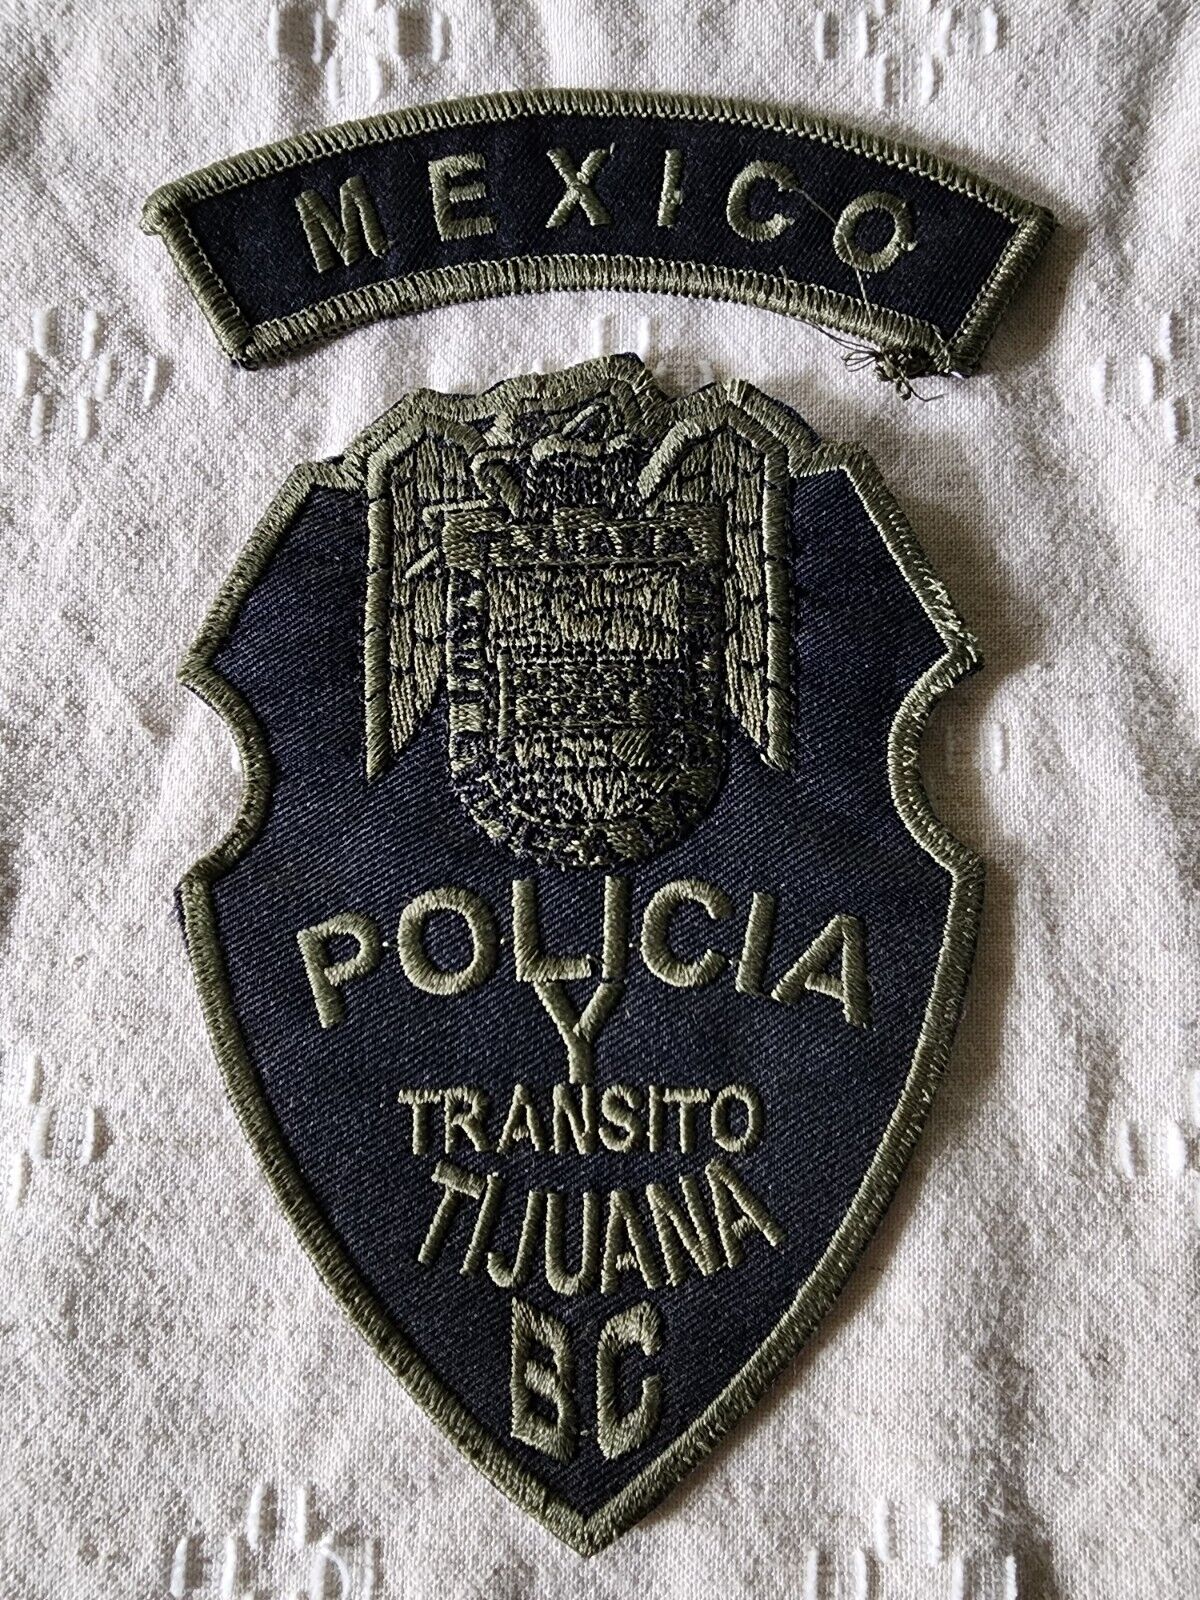 Tijuana BC Mexico Policia Y Transito 2pc Patch Set Black/Green